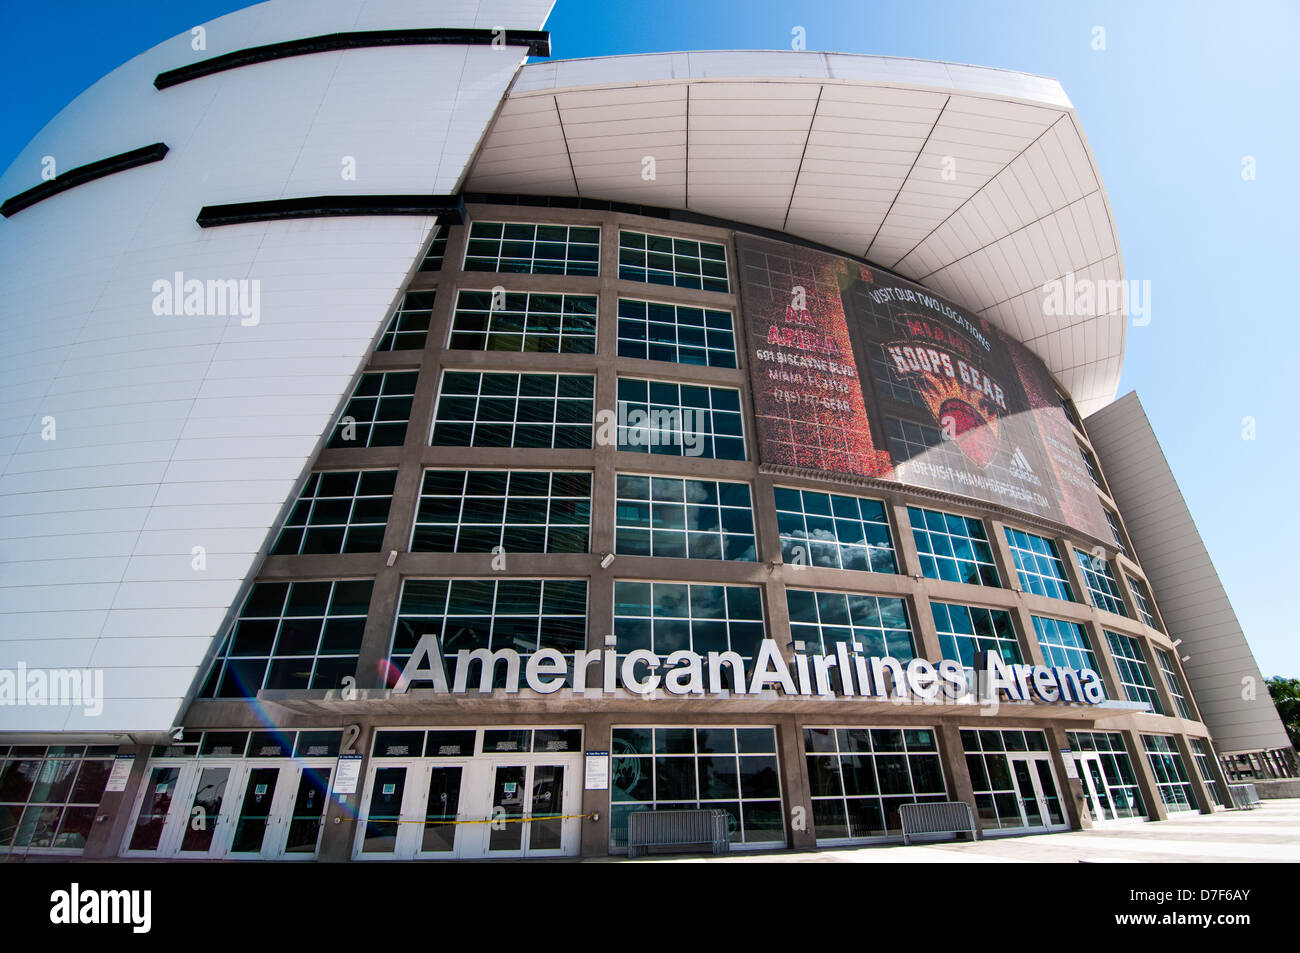 MIAMI - 5 novembre : American Airlines Arena à Miami le 5 novembre 2011, est le foyer de l'équipe NBA Miami Heat. Max Herman/Alamy Banque D'Images